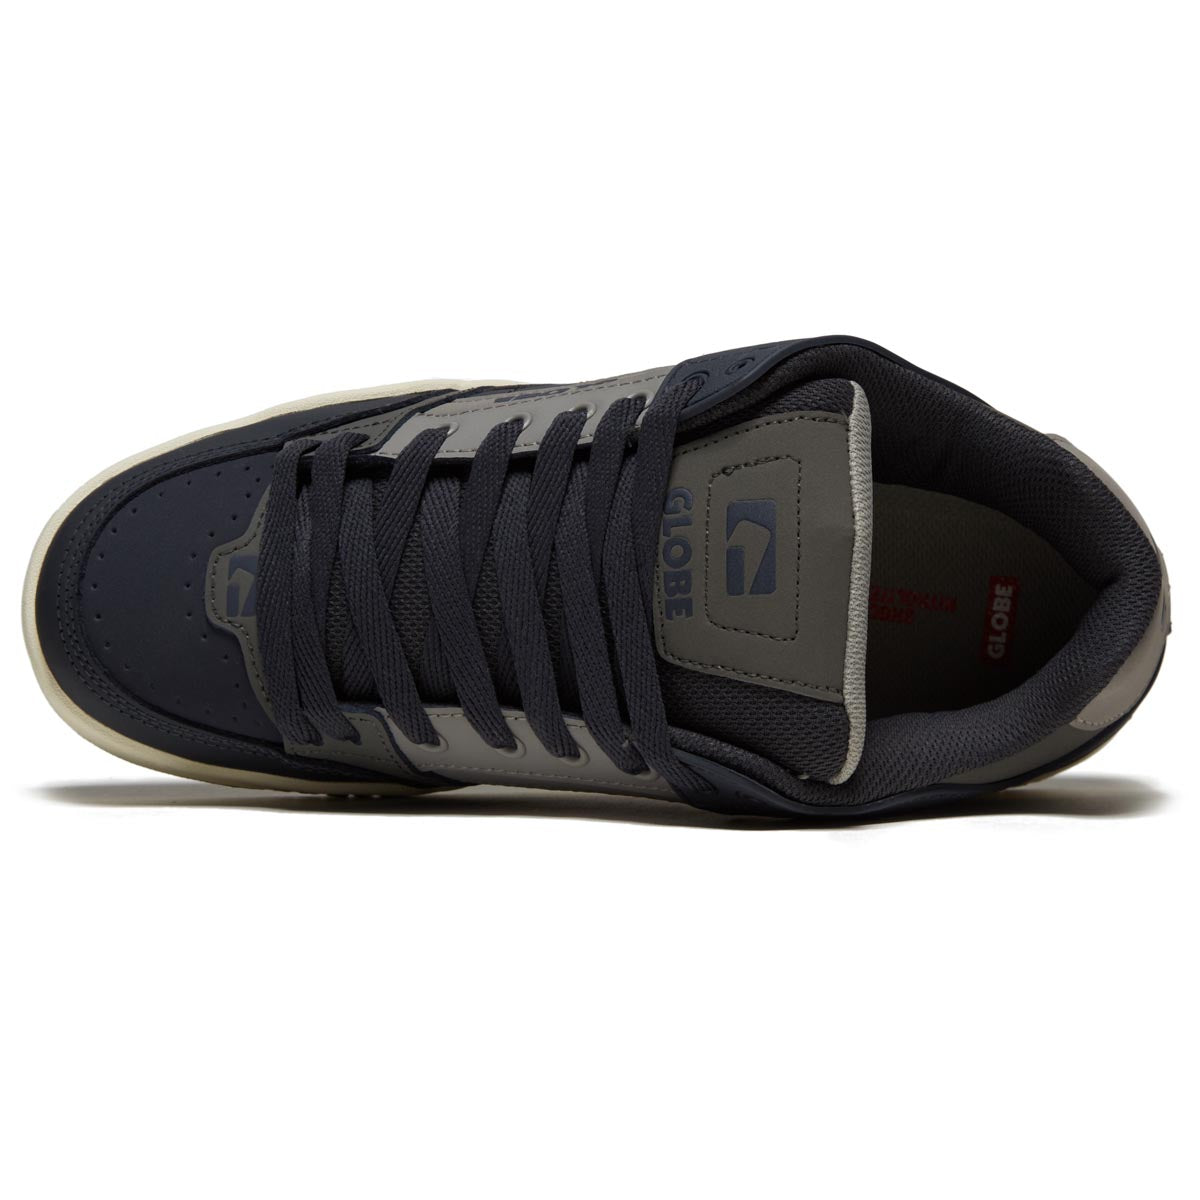 Globe Tilt Shoes - Ebony/Charcoal image 3